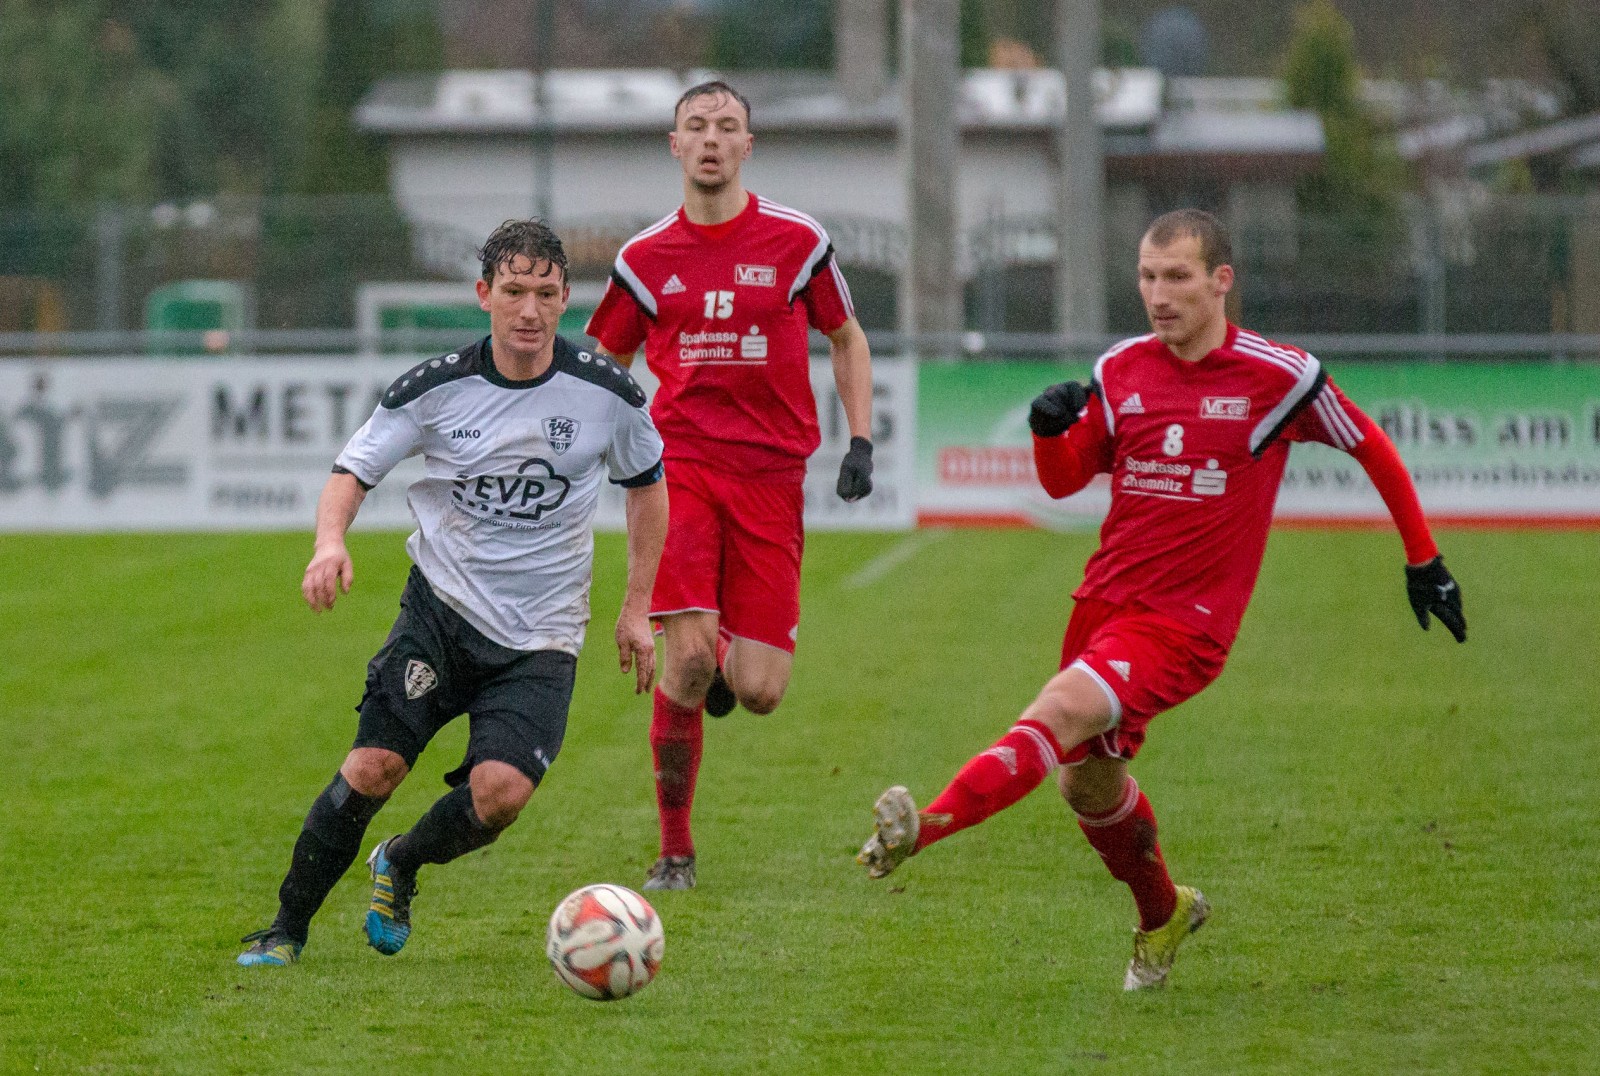 Ball im Blick, Gegner im Rücken: Mario Scholze vom VfL Pirna. Foto: Marko Förster